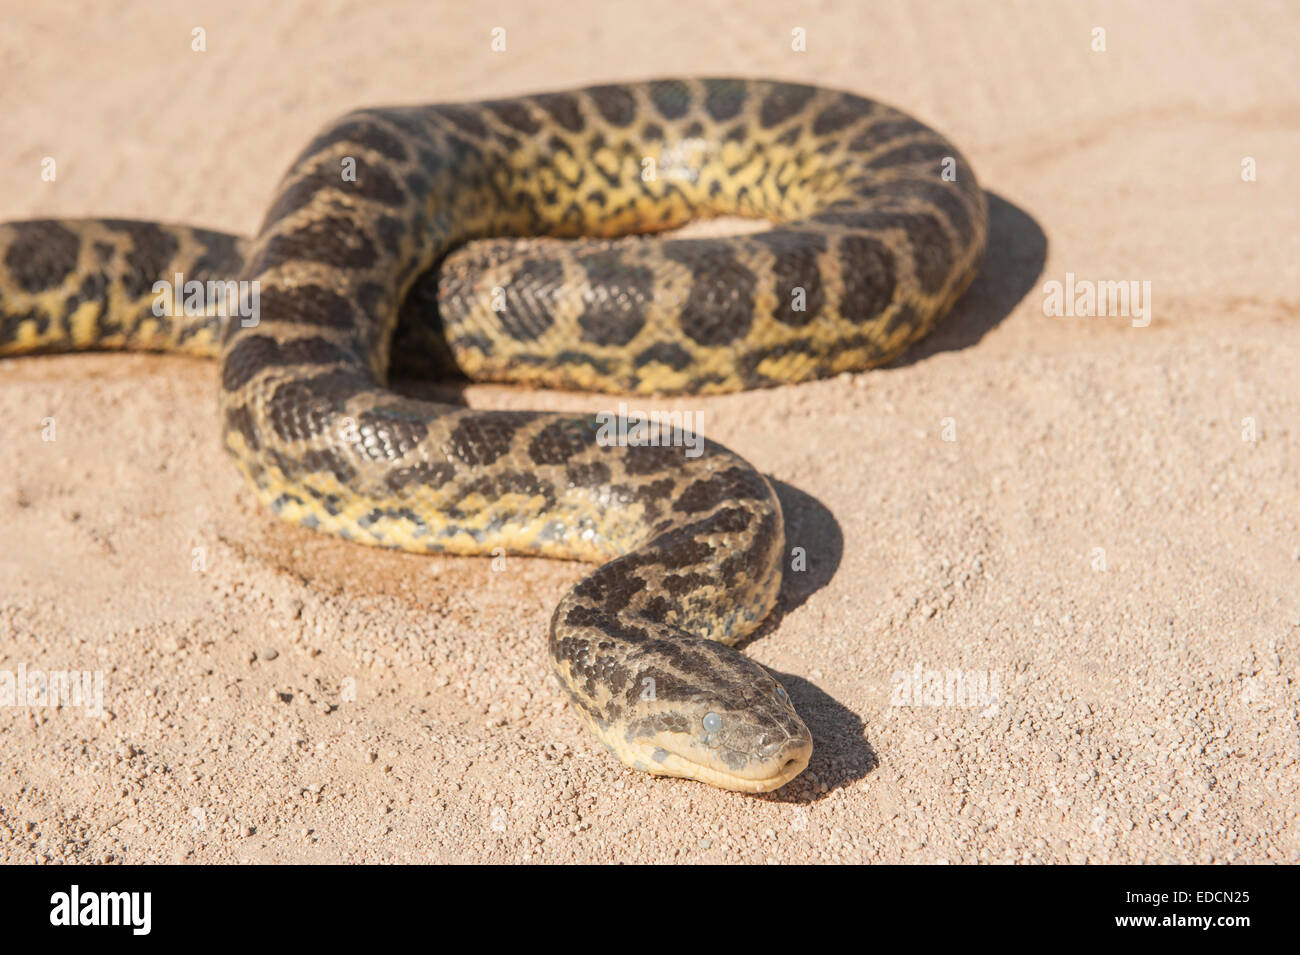 Closeup of desert rock python snake crawling on sandy arid ground Stock Photo